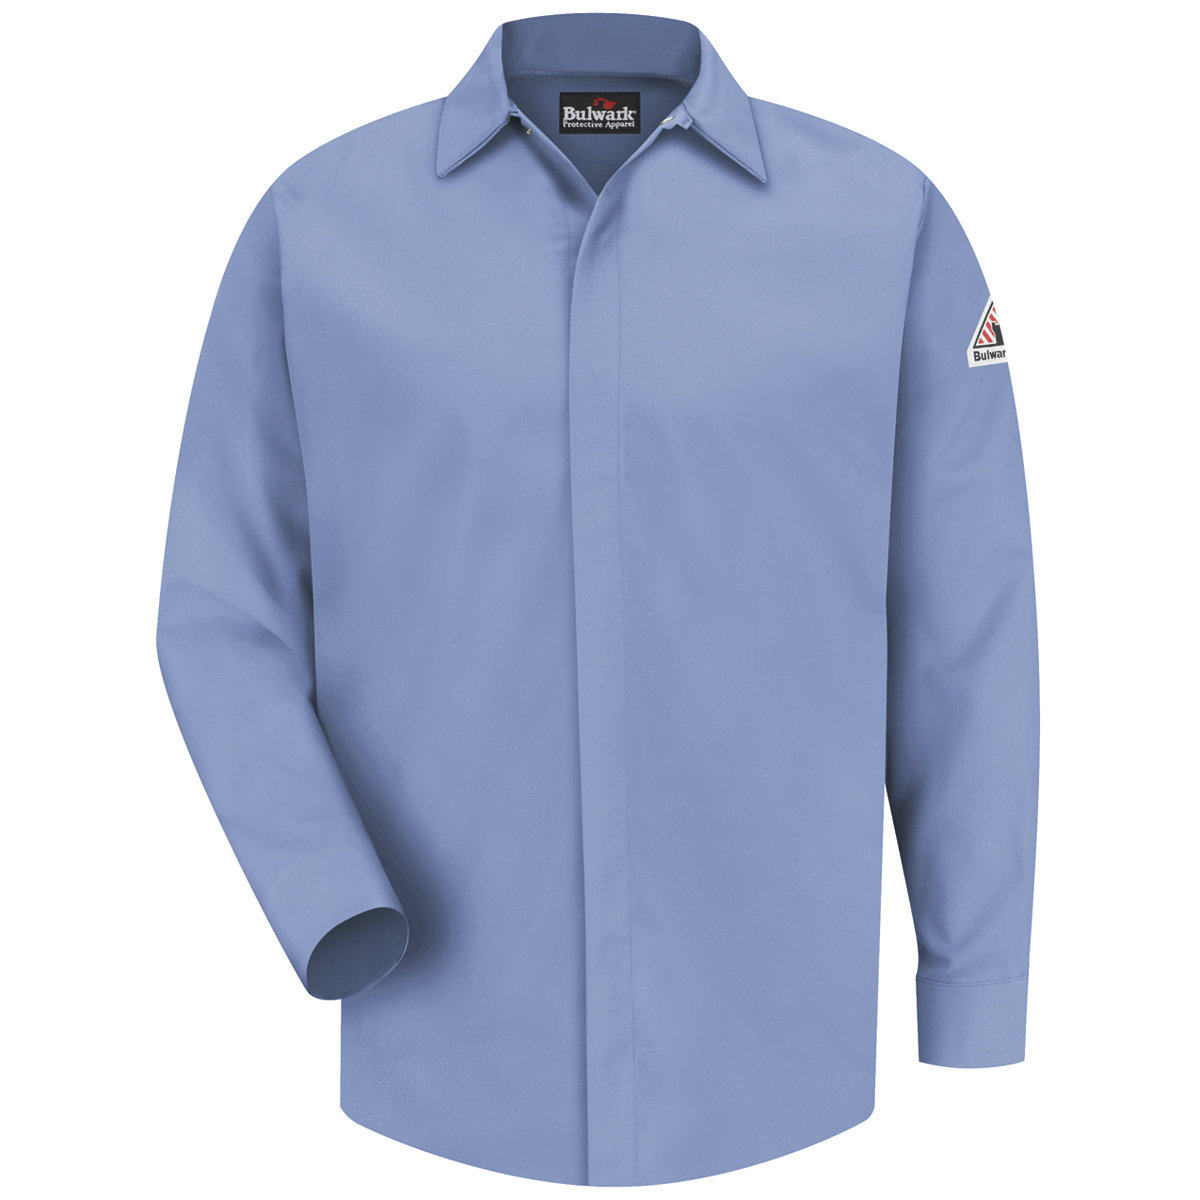 Bulwark® X-Large Regular Light Blue Westex Ultrasoft®/Cotton/Nylon Flame Resistant Work Shirt With Gripper Front Closure